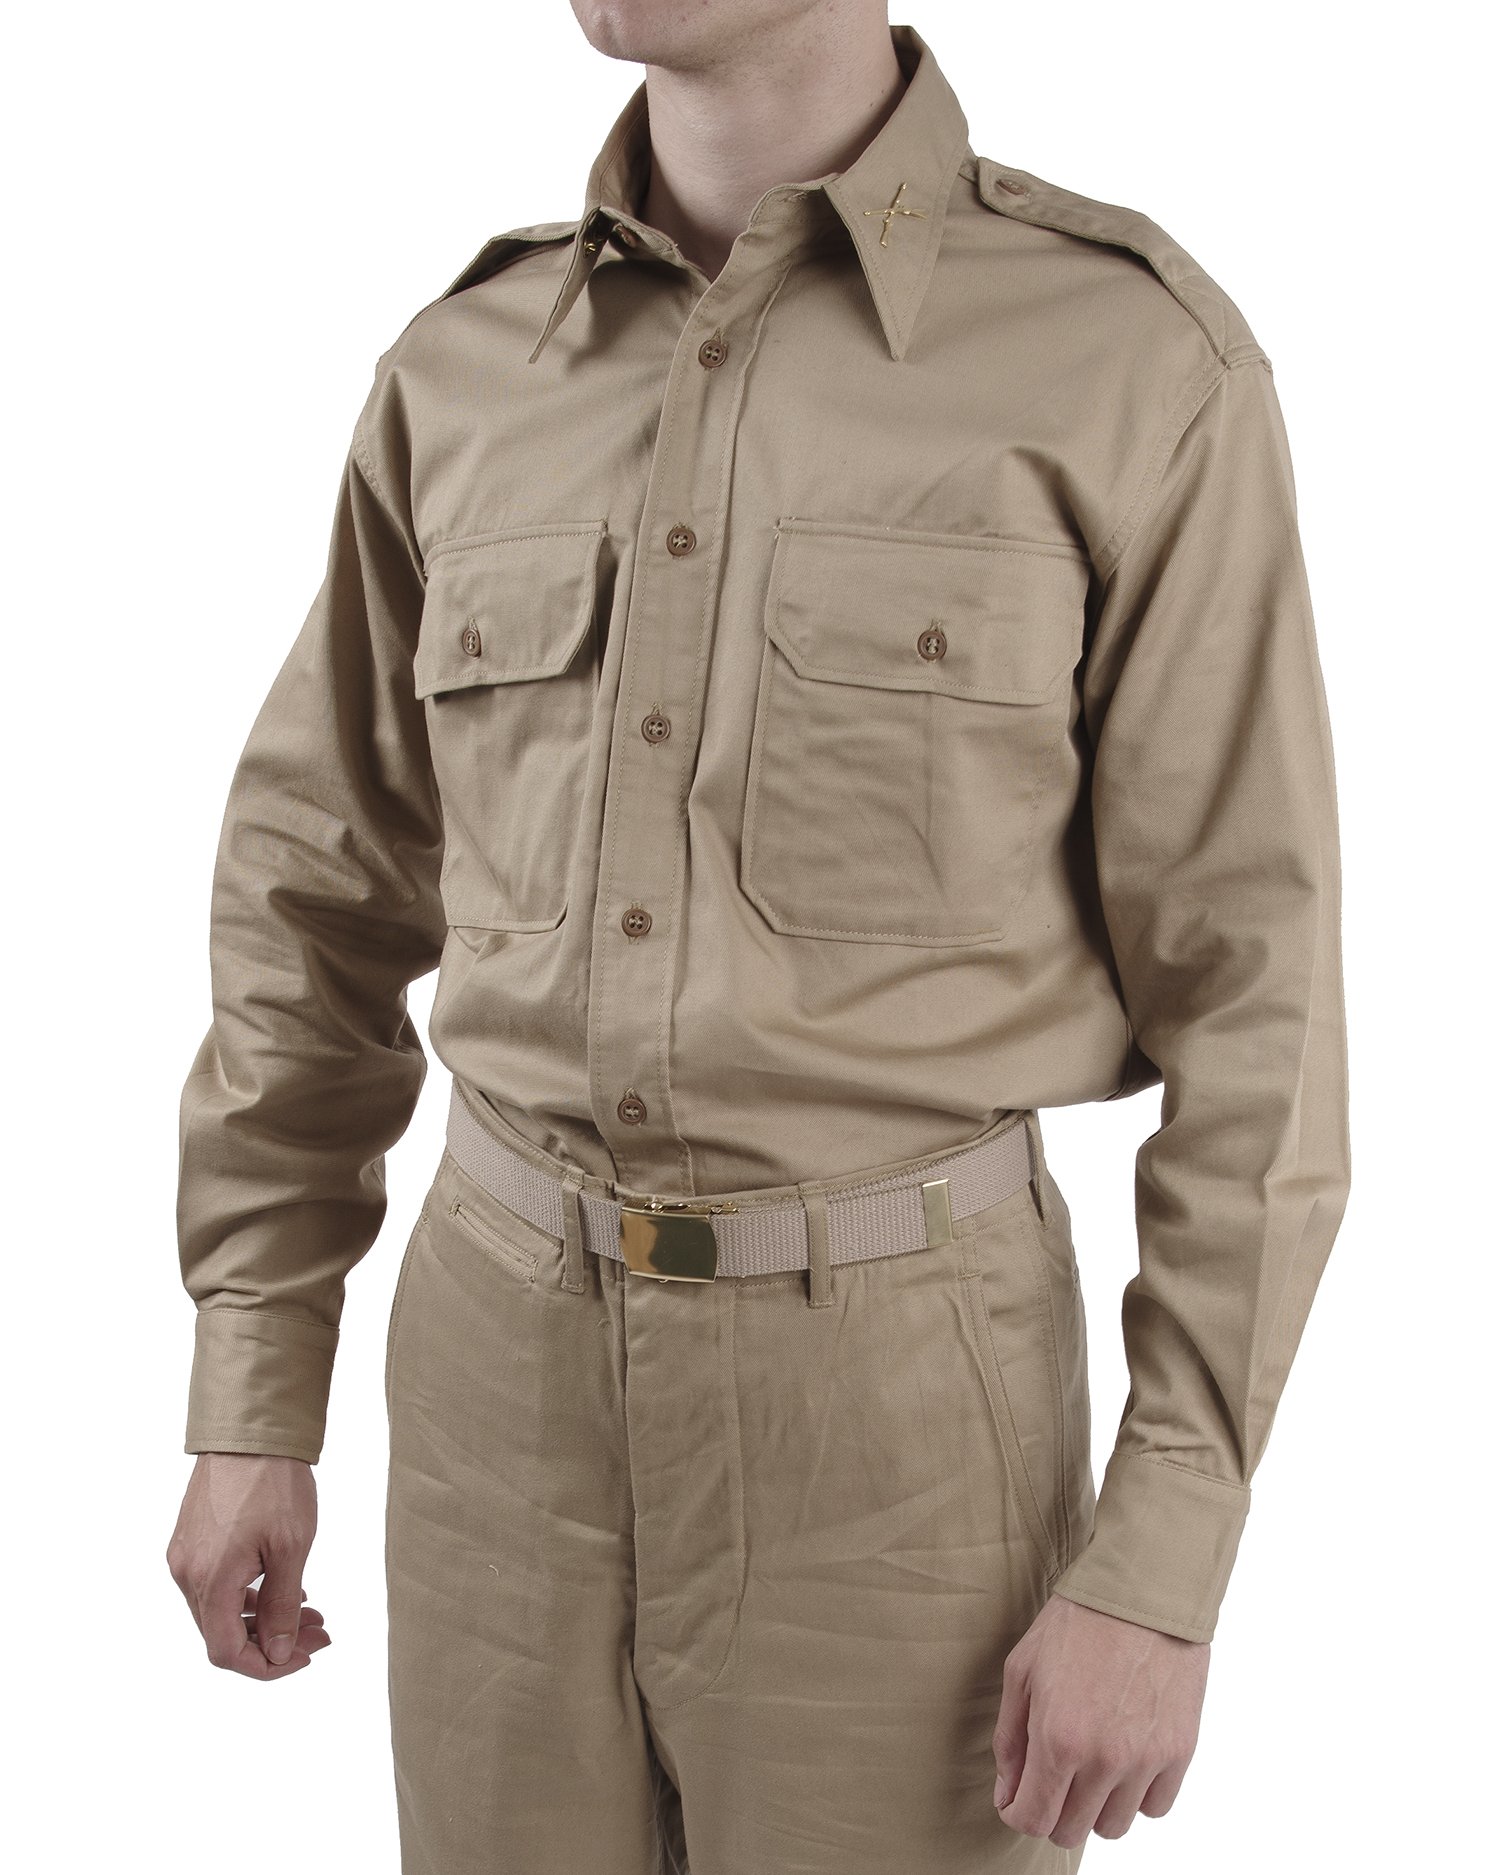 Summer Us Army Khaki Uniform | vlr.eng.br